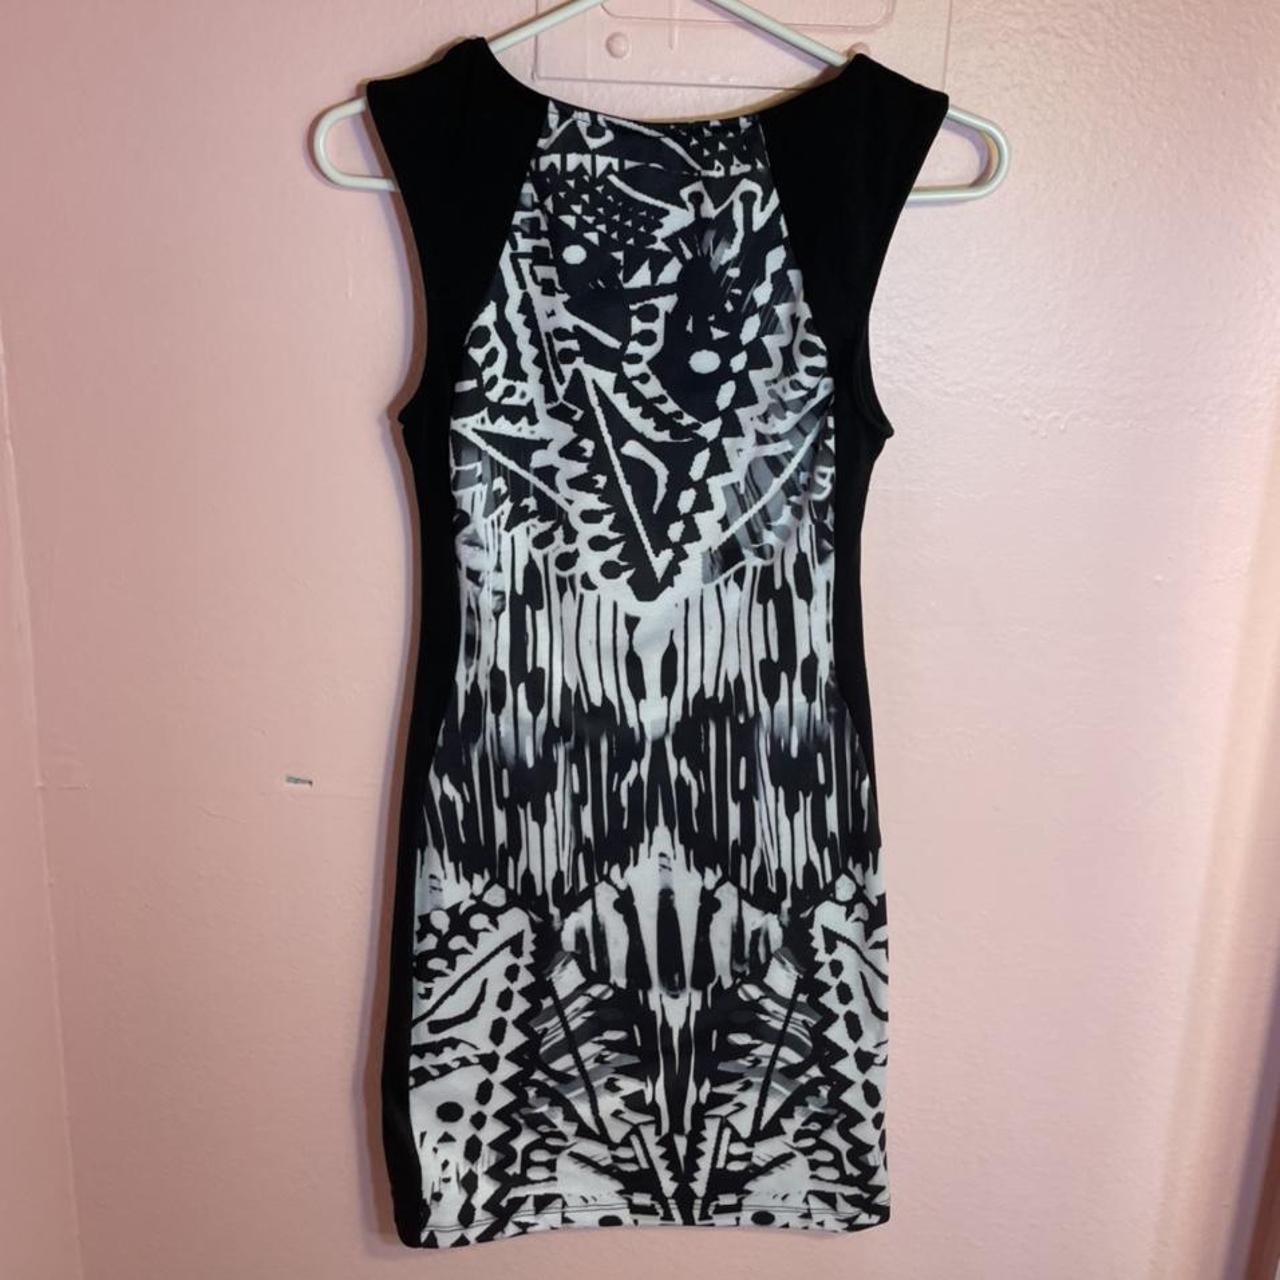 Product Image 4 - zebra skin tight dress 🎬

•